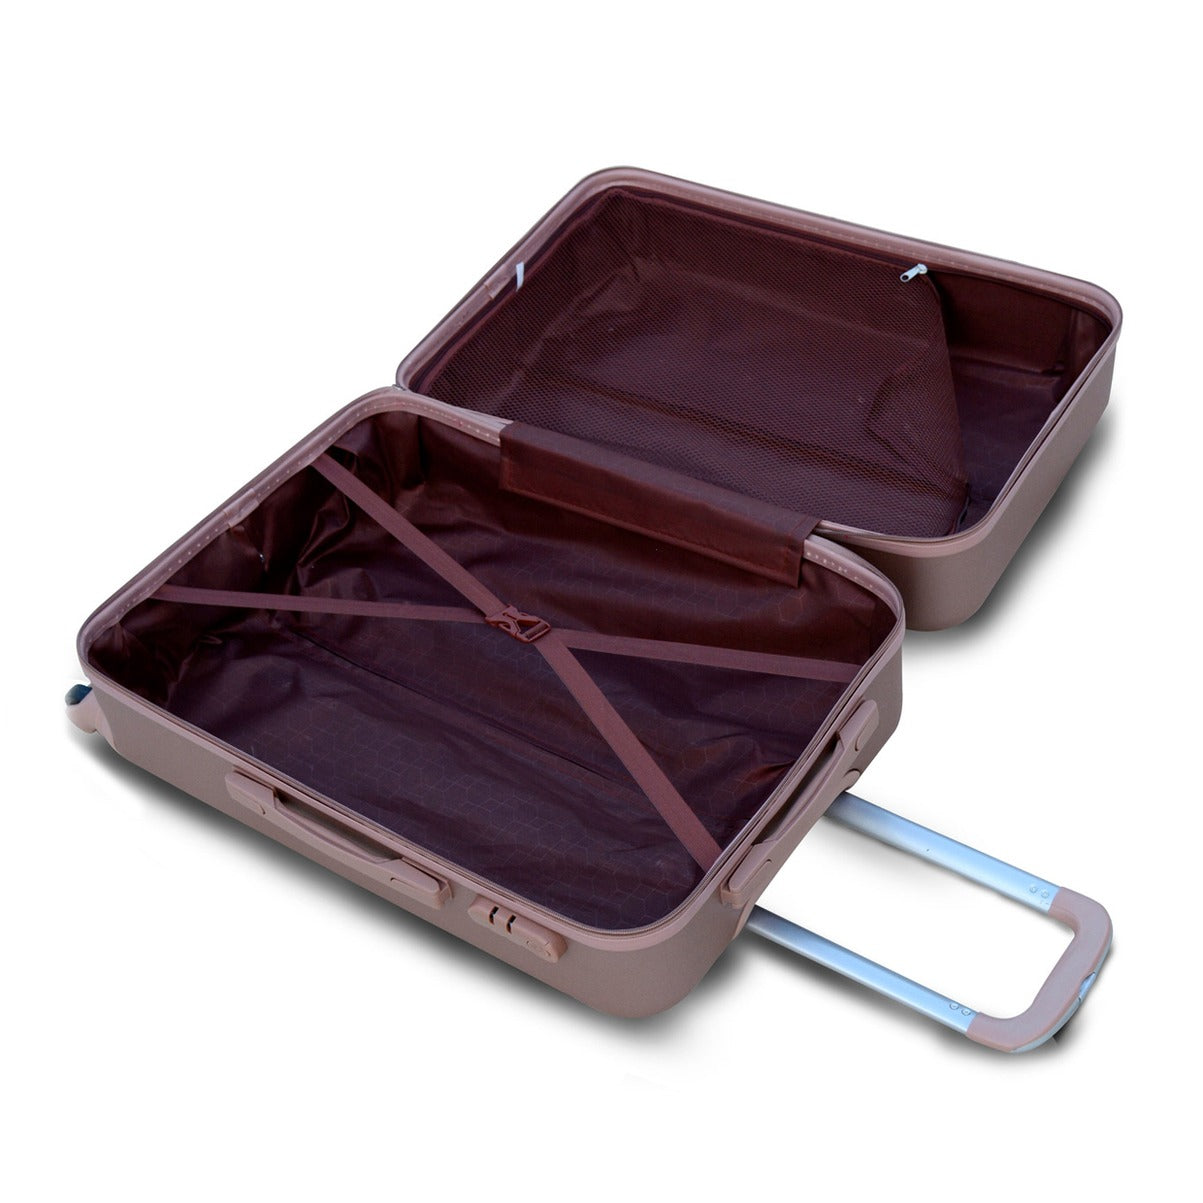 20" Rose Gold Colour Diamond Cut ABS Luggage Lightweight Hard Case Trolley Bag Zaappy.com